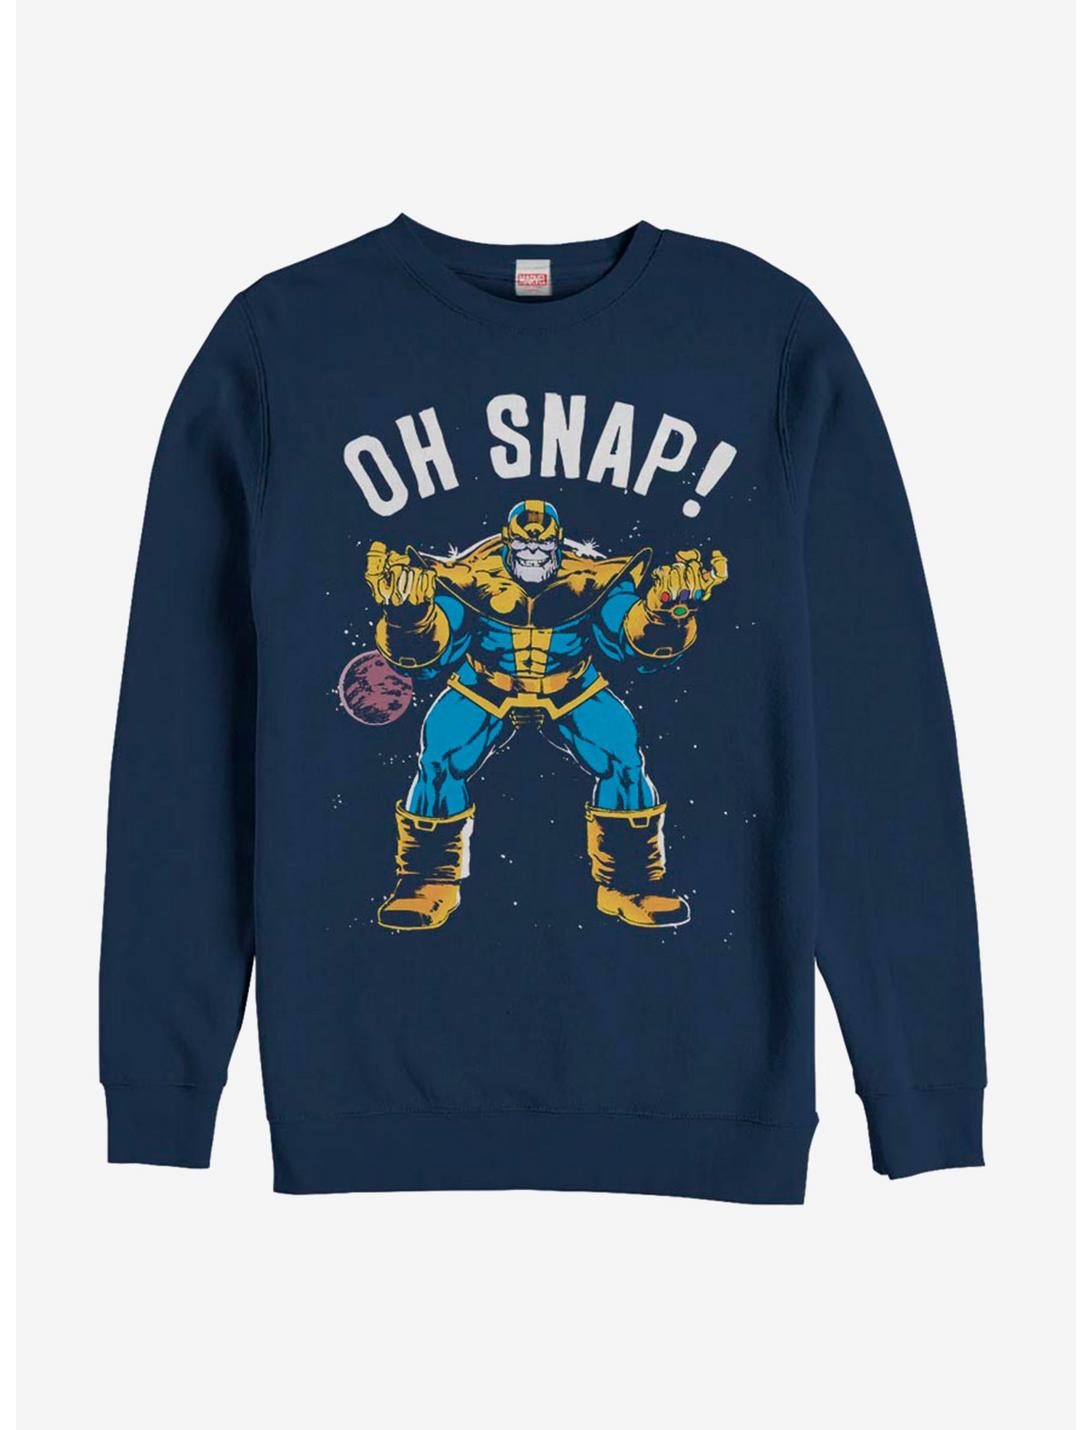 Avengers Aw Snap Sweatshirt, NAVY, hi-res